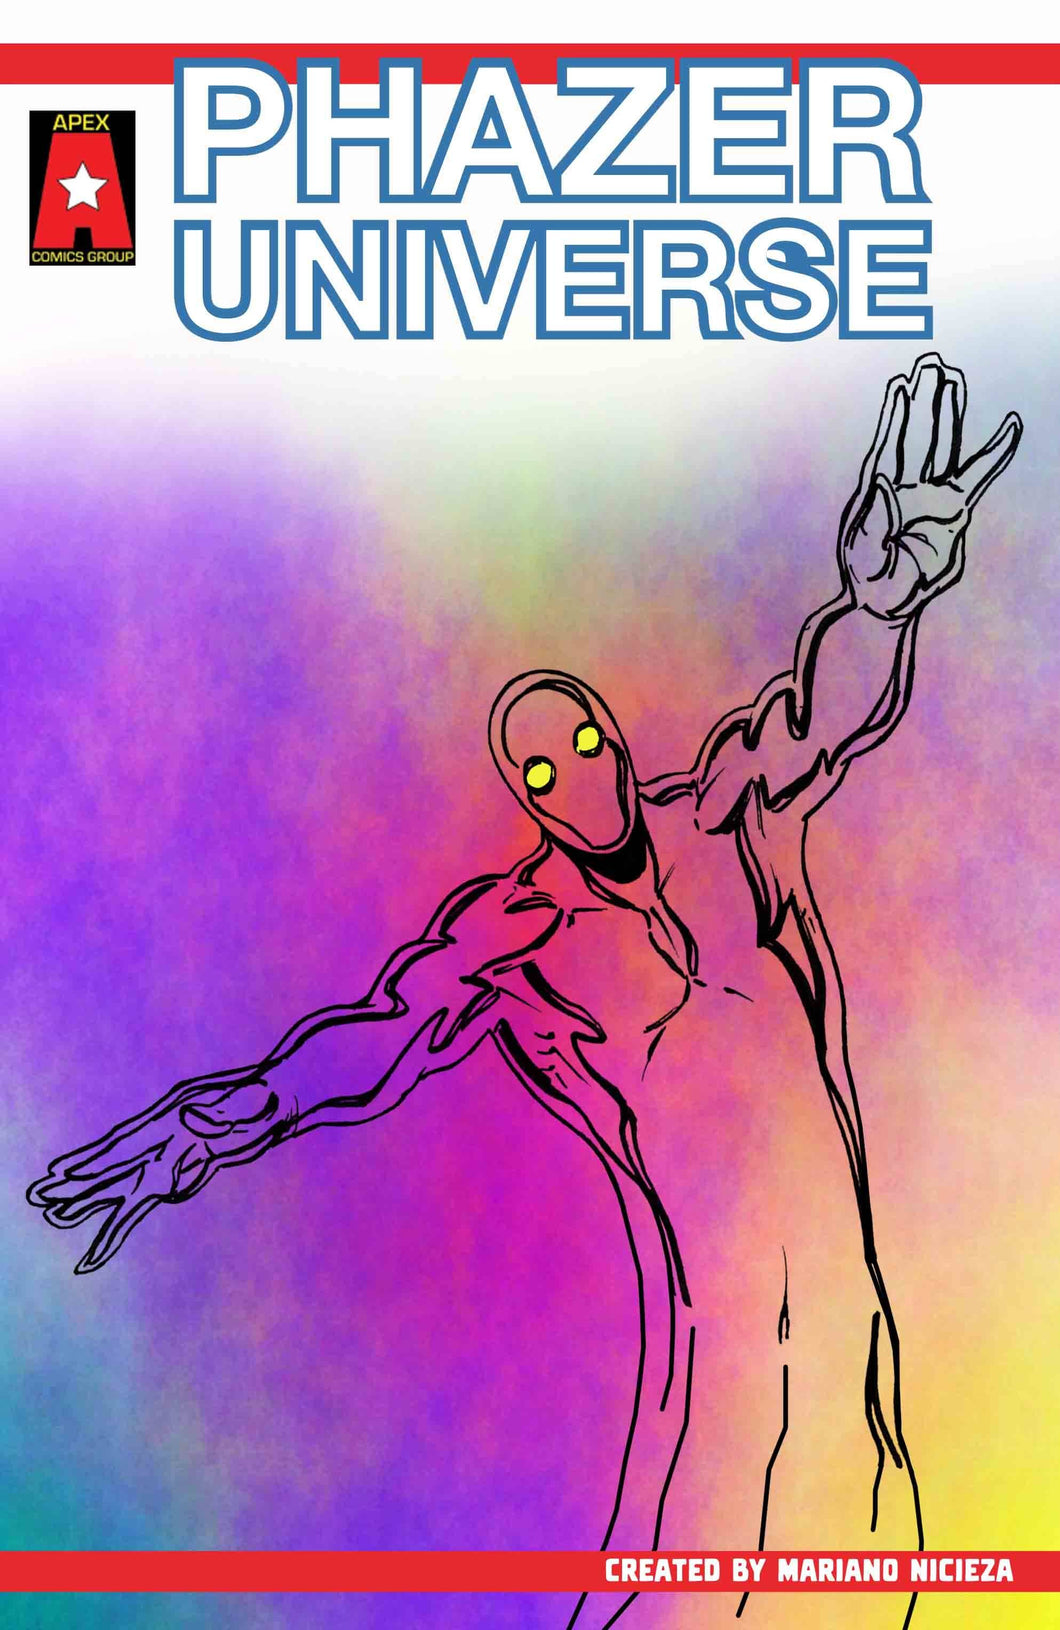 PHAZER UNIVERSE #1 CVR J COLOR SKETCH SUPER LIQUID AVATAR